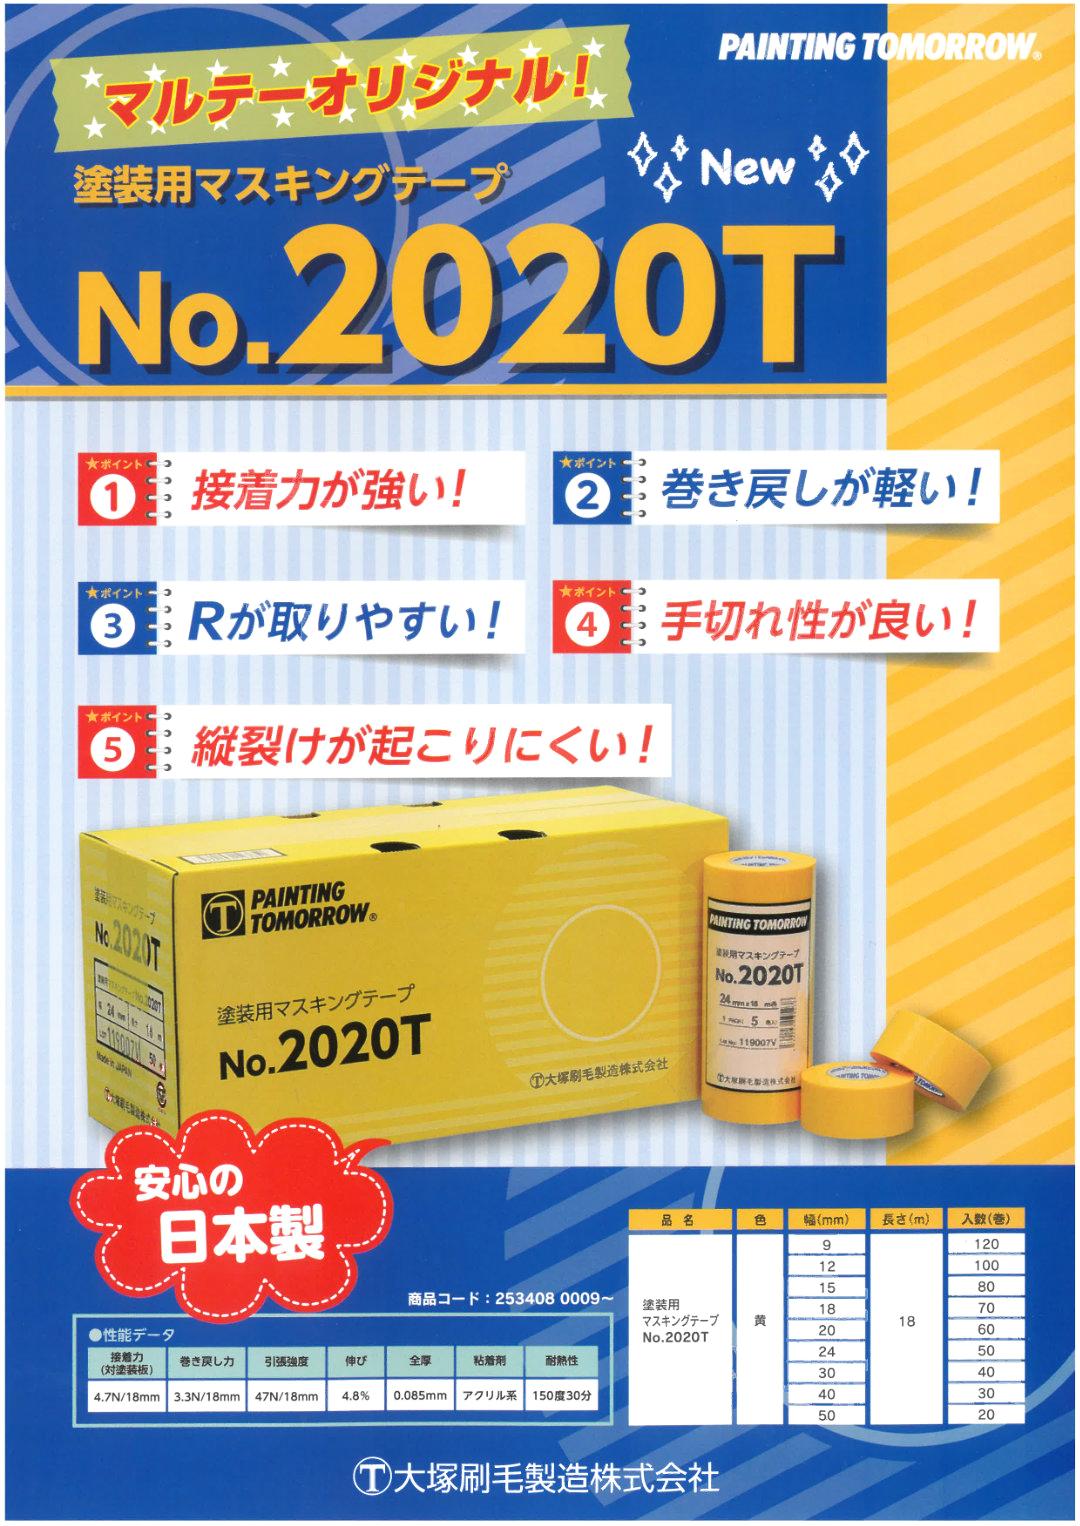 No.2020T 塗装用マスキングテープ 黄 15mm akiba paint web 本店